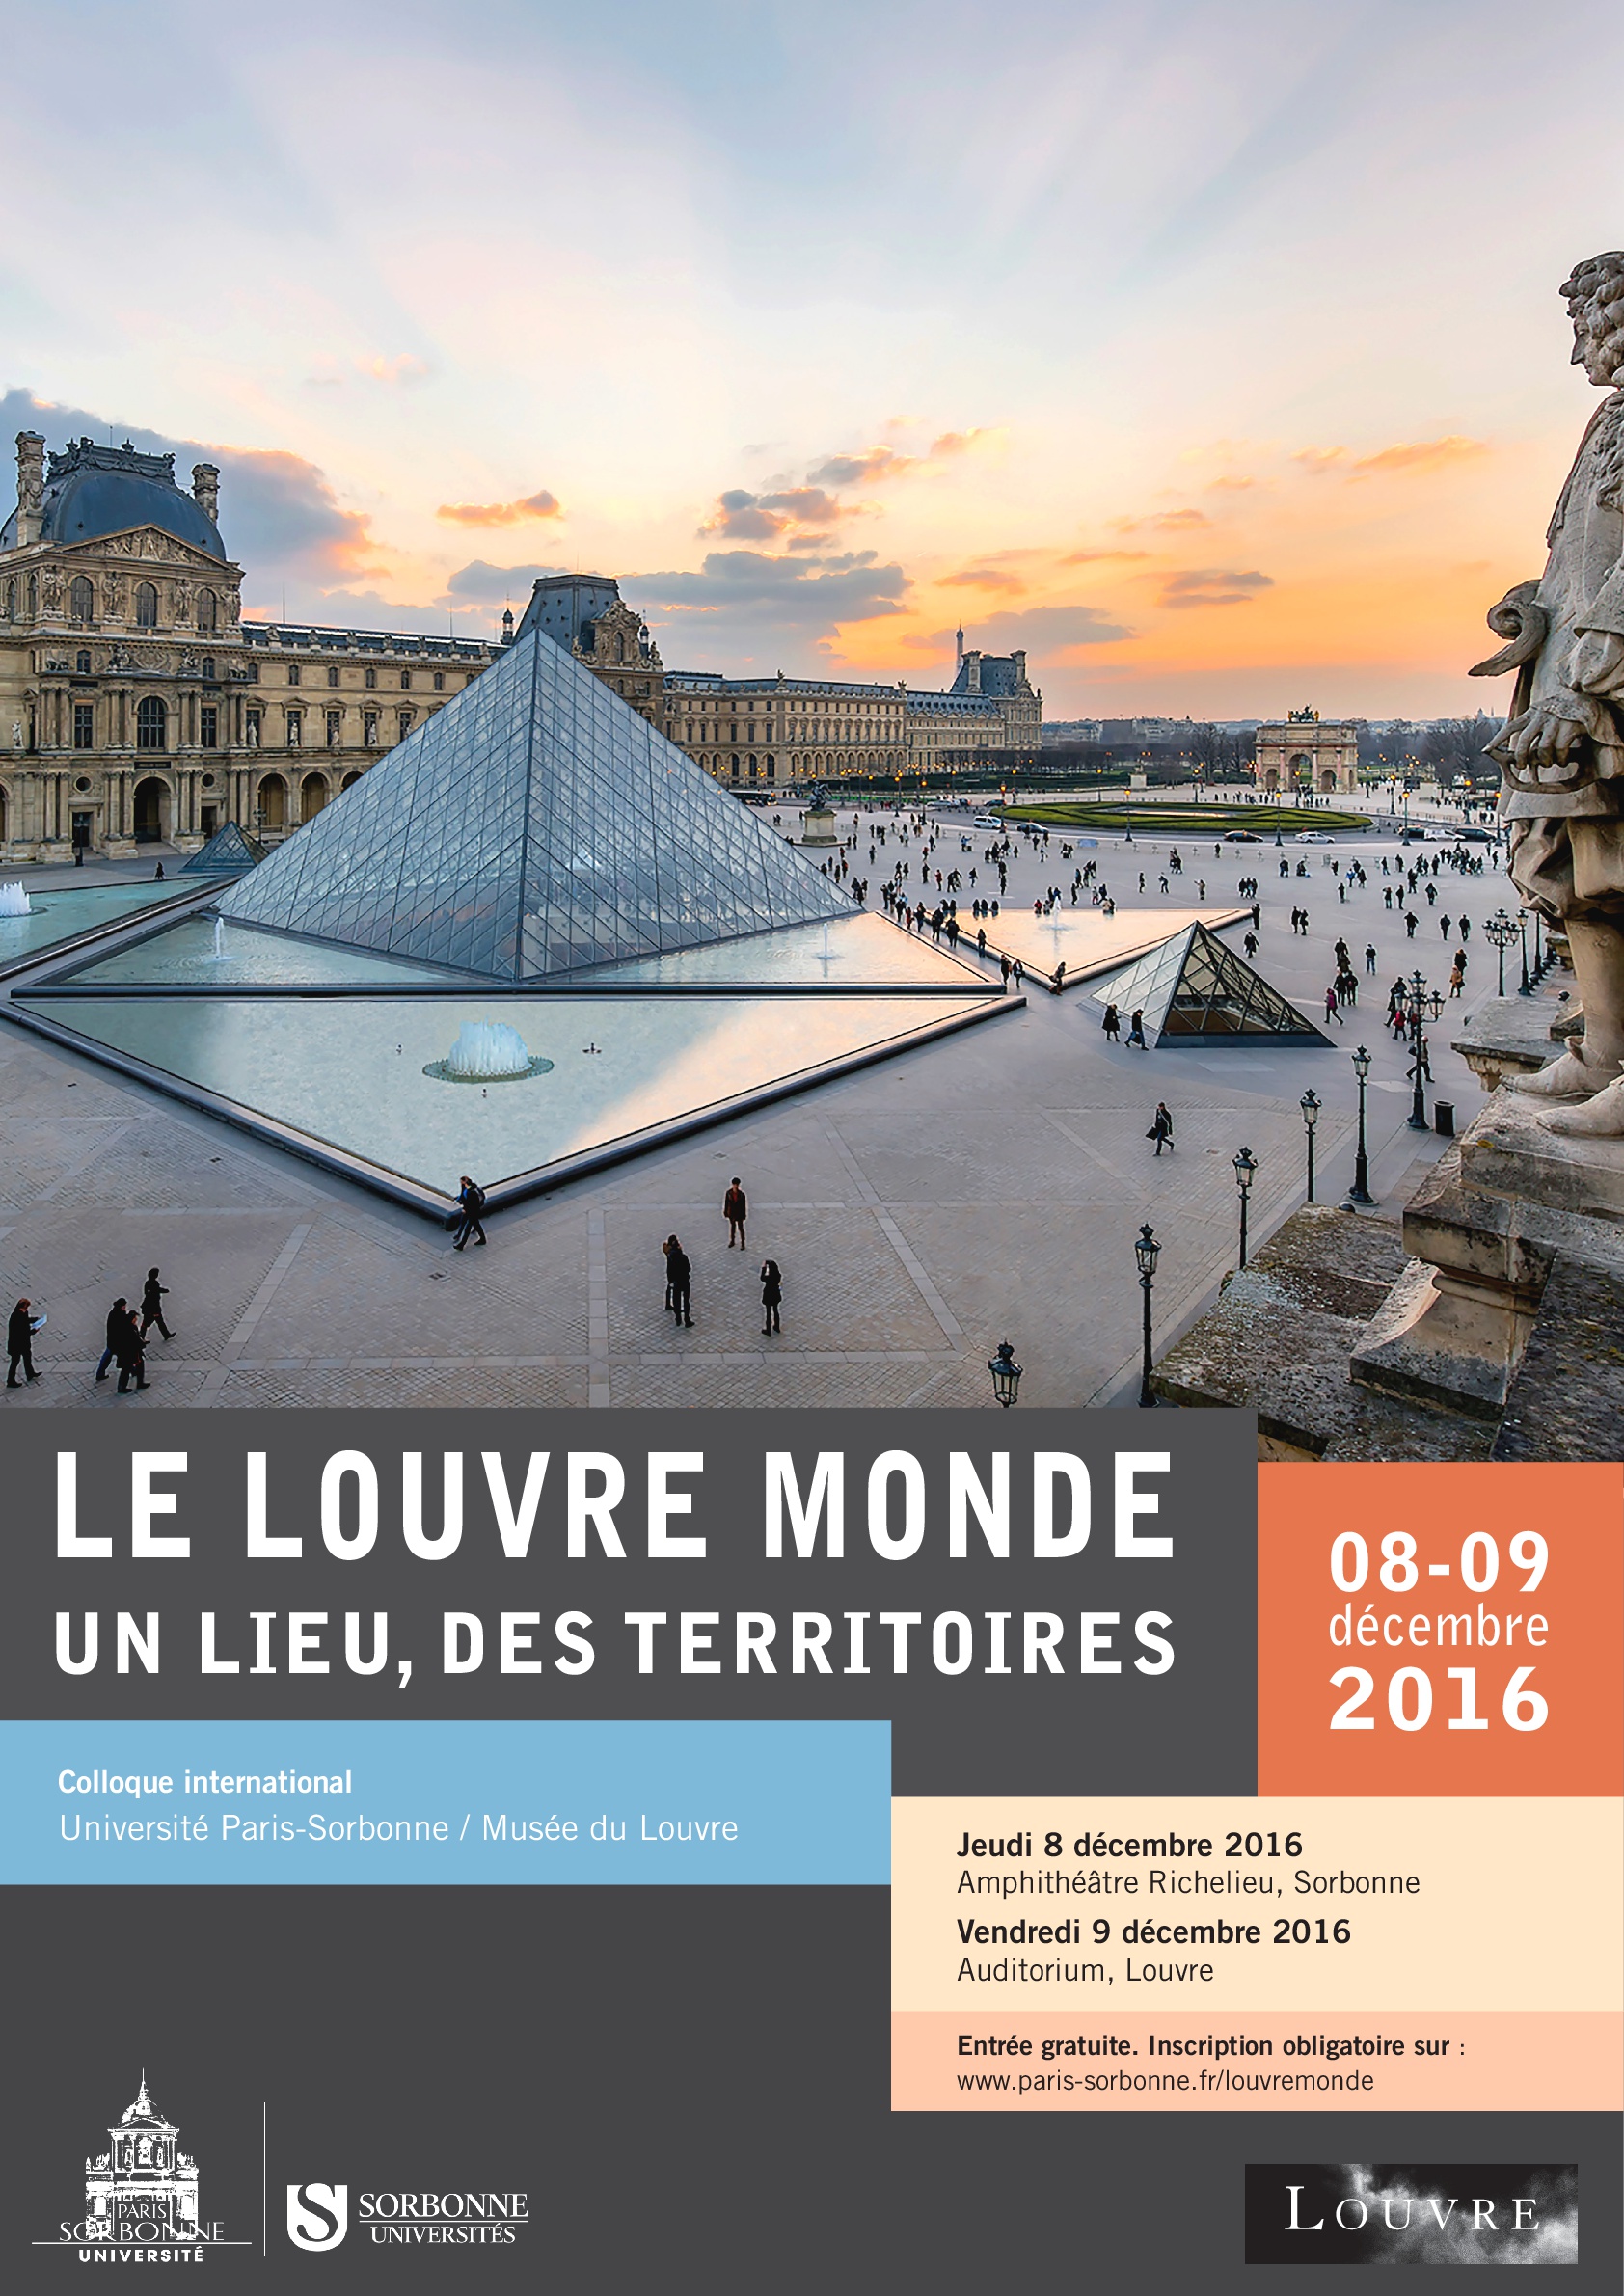 Coloquio internacional "Le Louvre: un lieu, des territoires" - 1